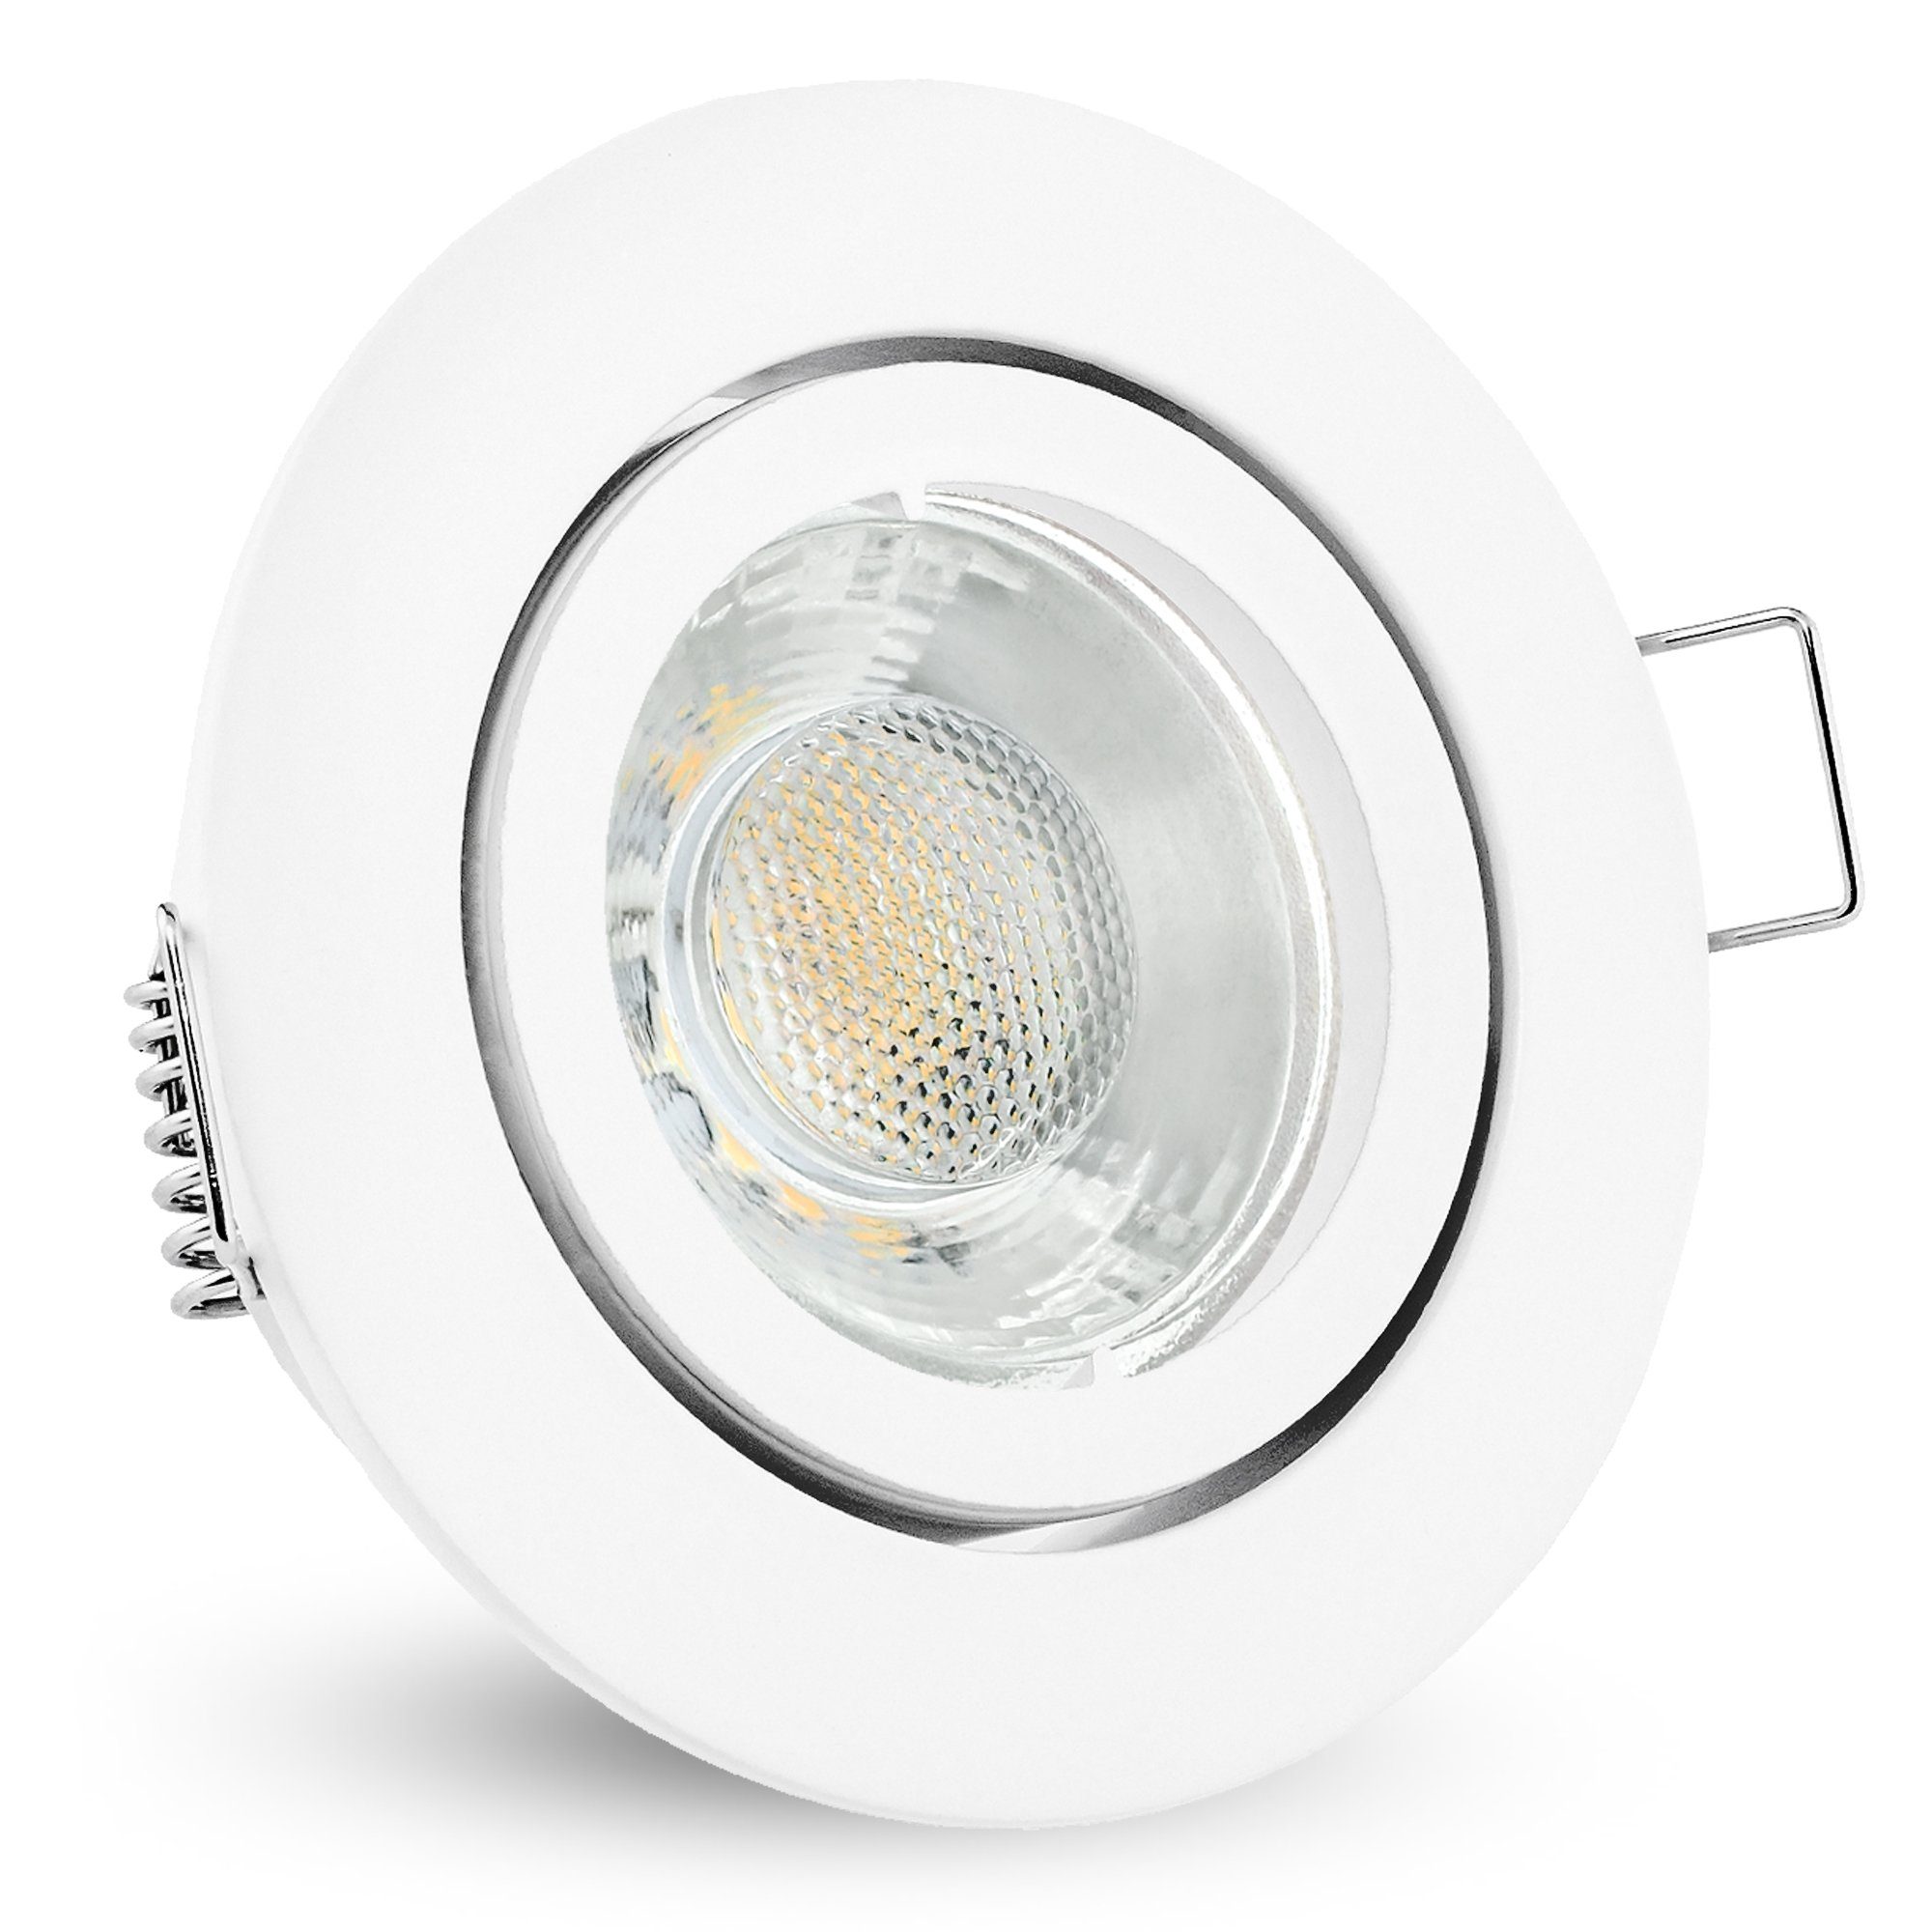 Weiss GU10 3W LED 230V inklusive, Einbaustrahler neutralweiss Leuchtmittel inklusive - Leuchtmittel Einbaustrahler schwenkbar, LED rund linovum